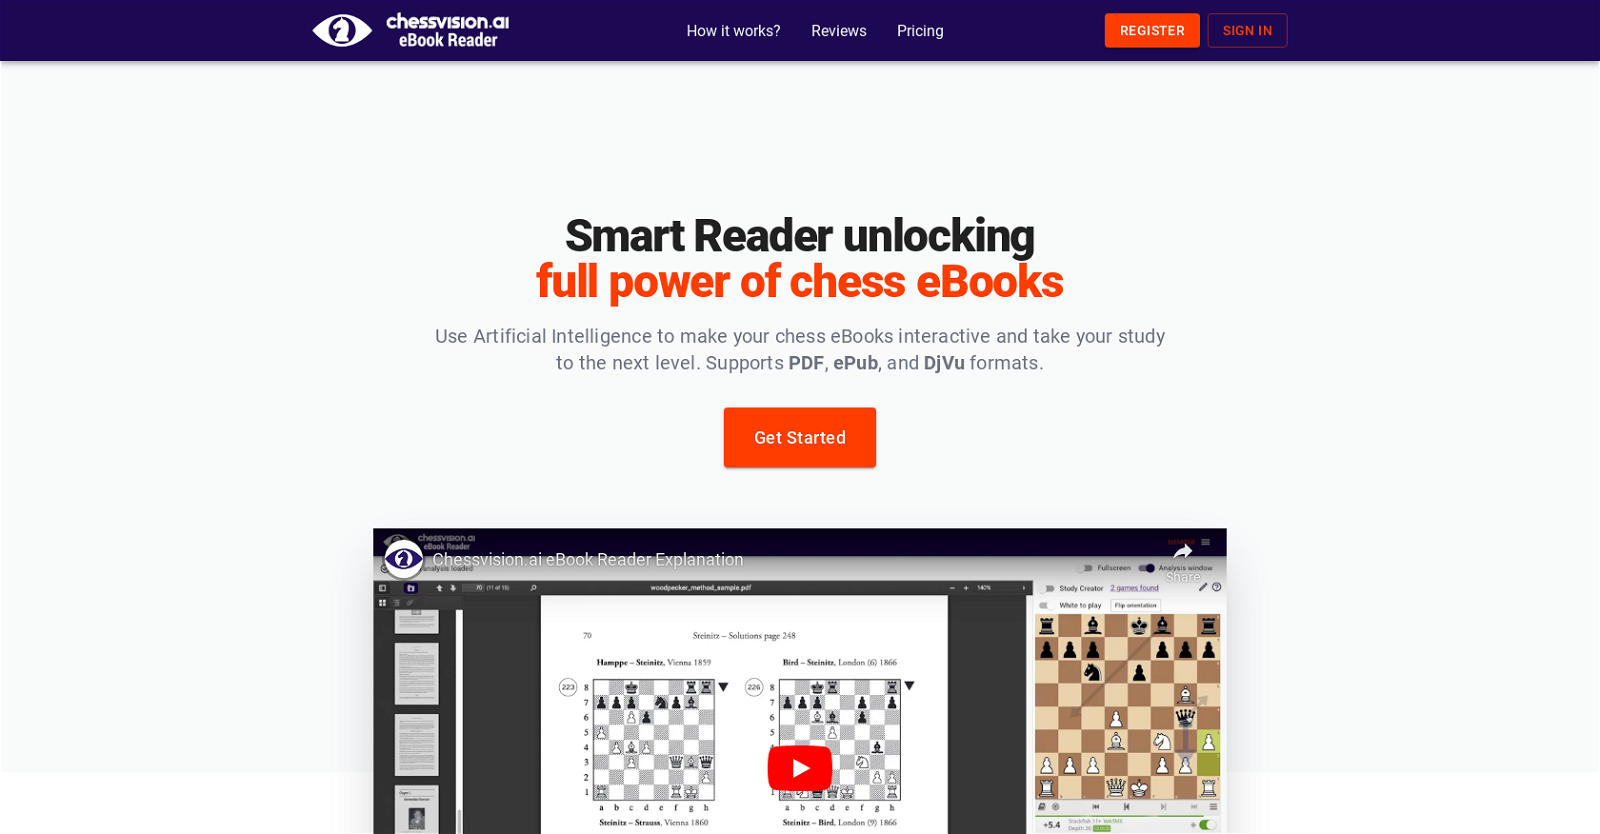 eBook Chessvision